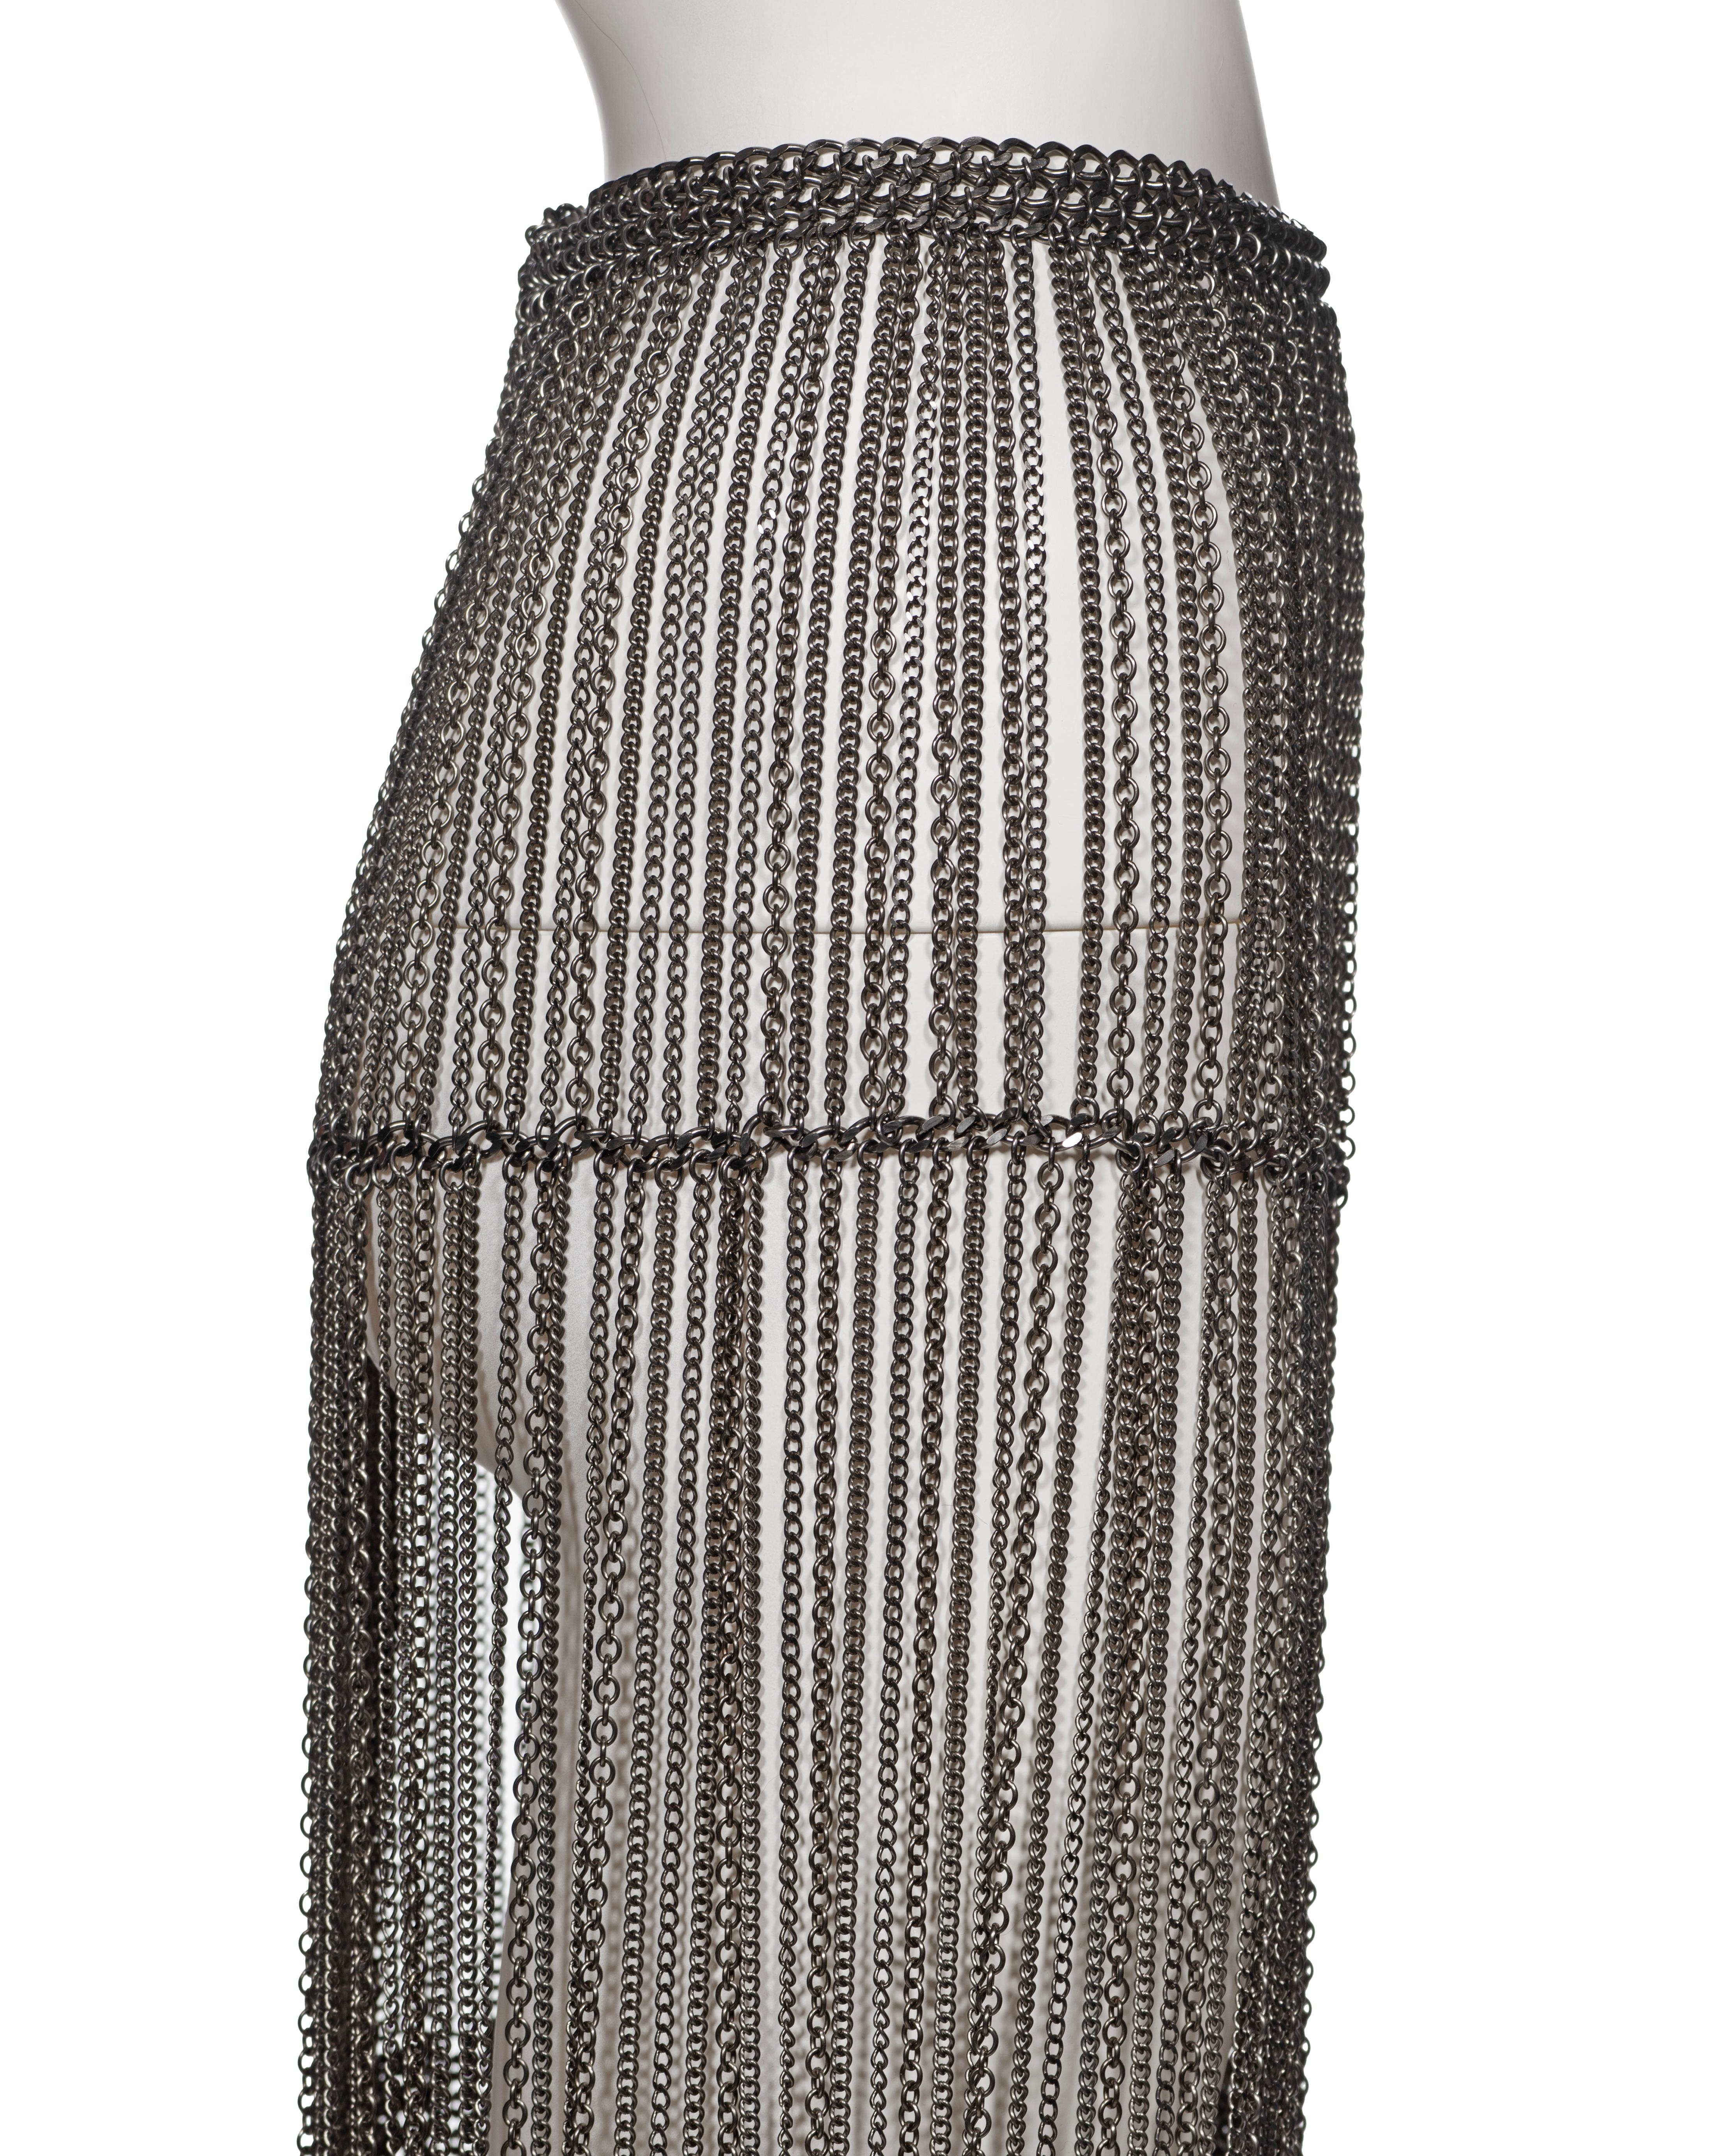 Prada by Miuccia Prada Silver Metal Chain Fringed Evening Skirt, fw 2002 For Sale 5